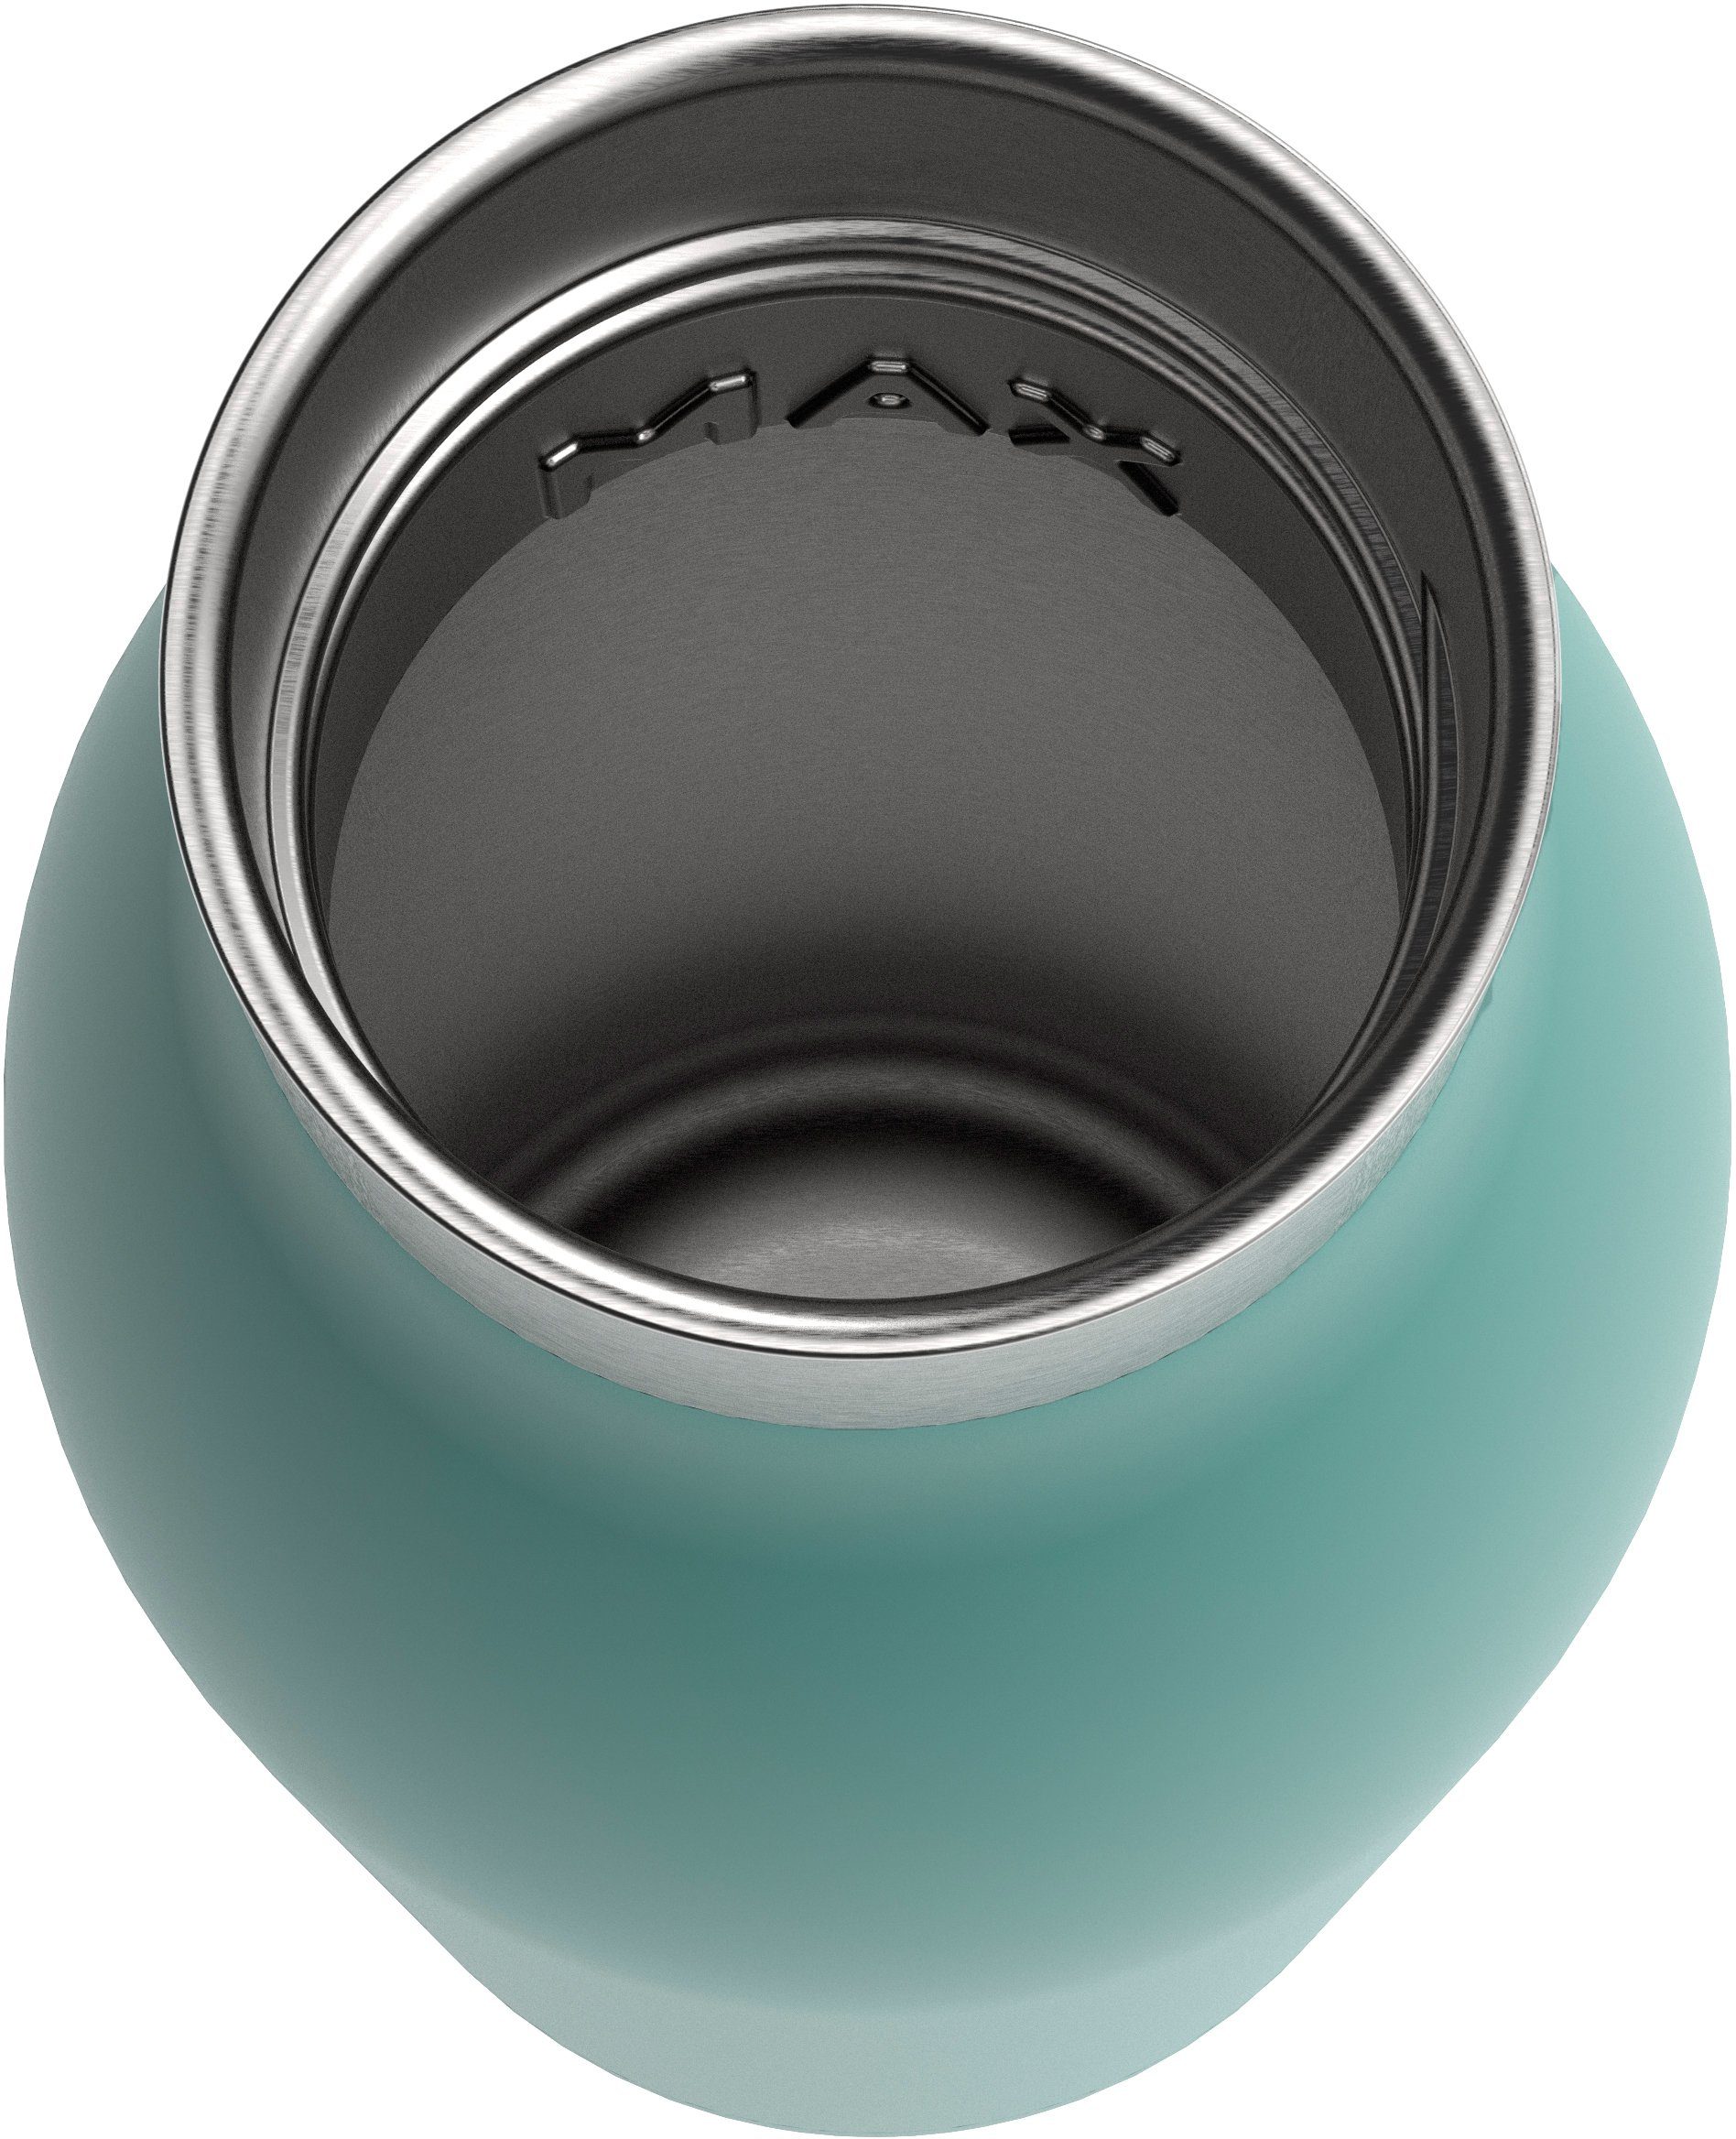 Emsa Trinkflasche Bludrop Color, spülmaschinenfest 12h petrol Quick-Press warm/24h kühl, Edelstahl, Deckel